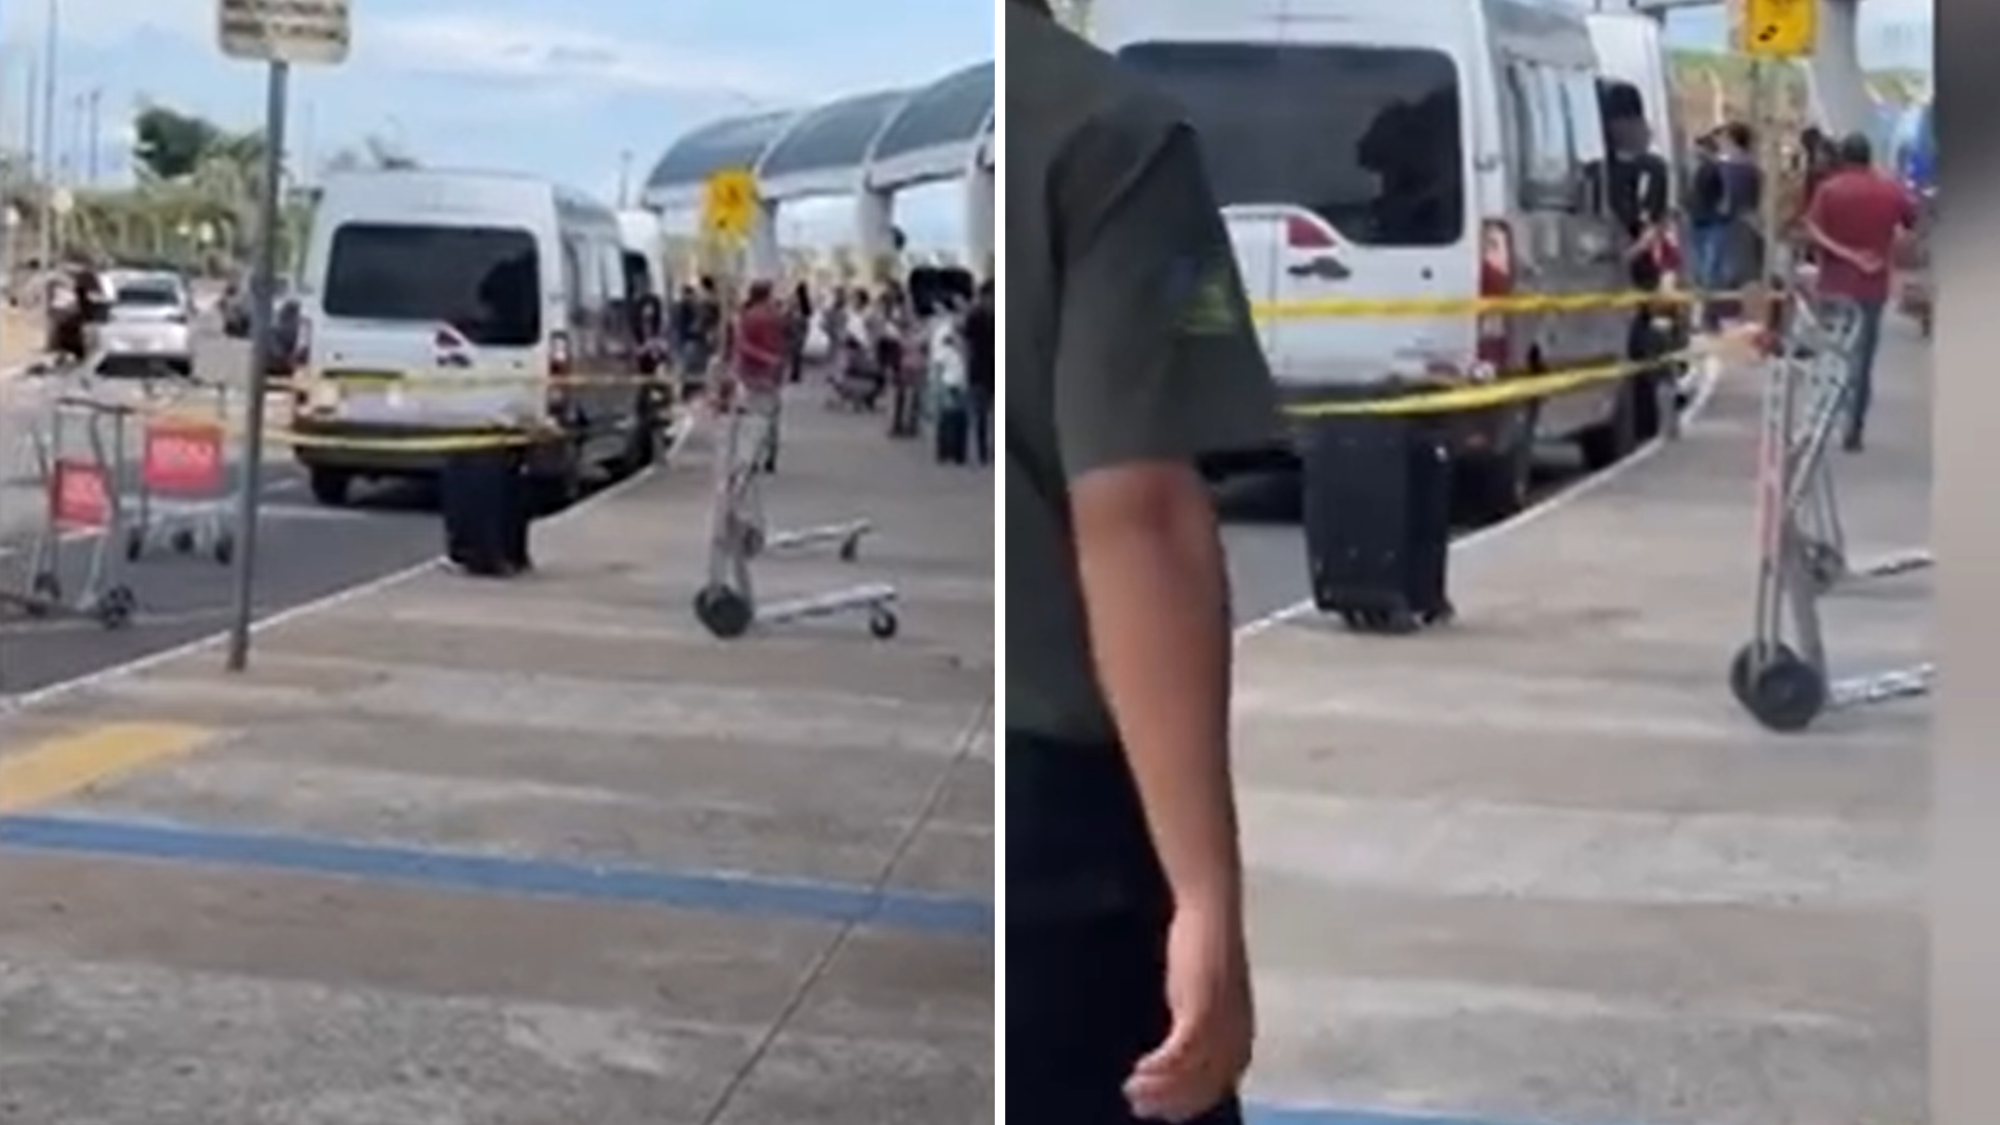 Mala esquecida no Aeroporto Santa Genoveva provoca alerta de bomba